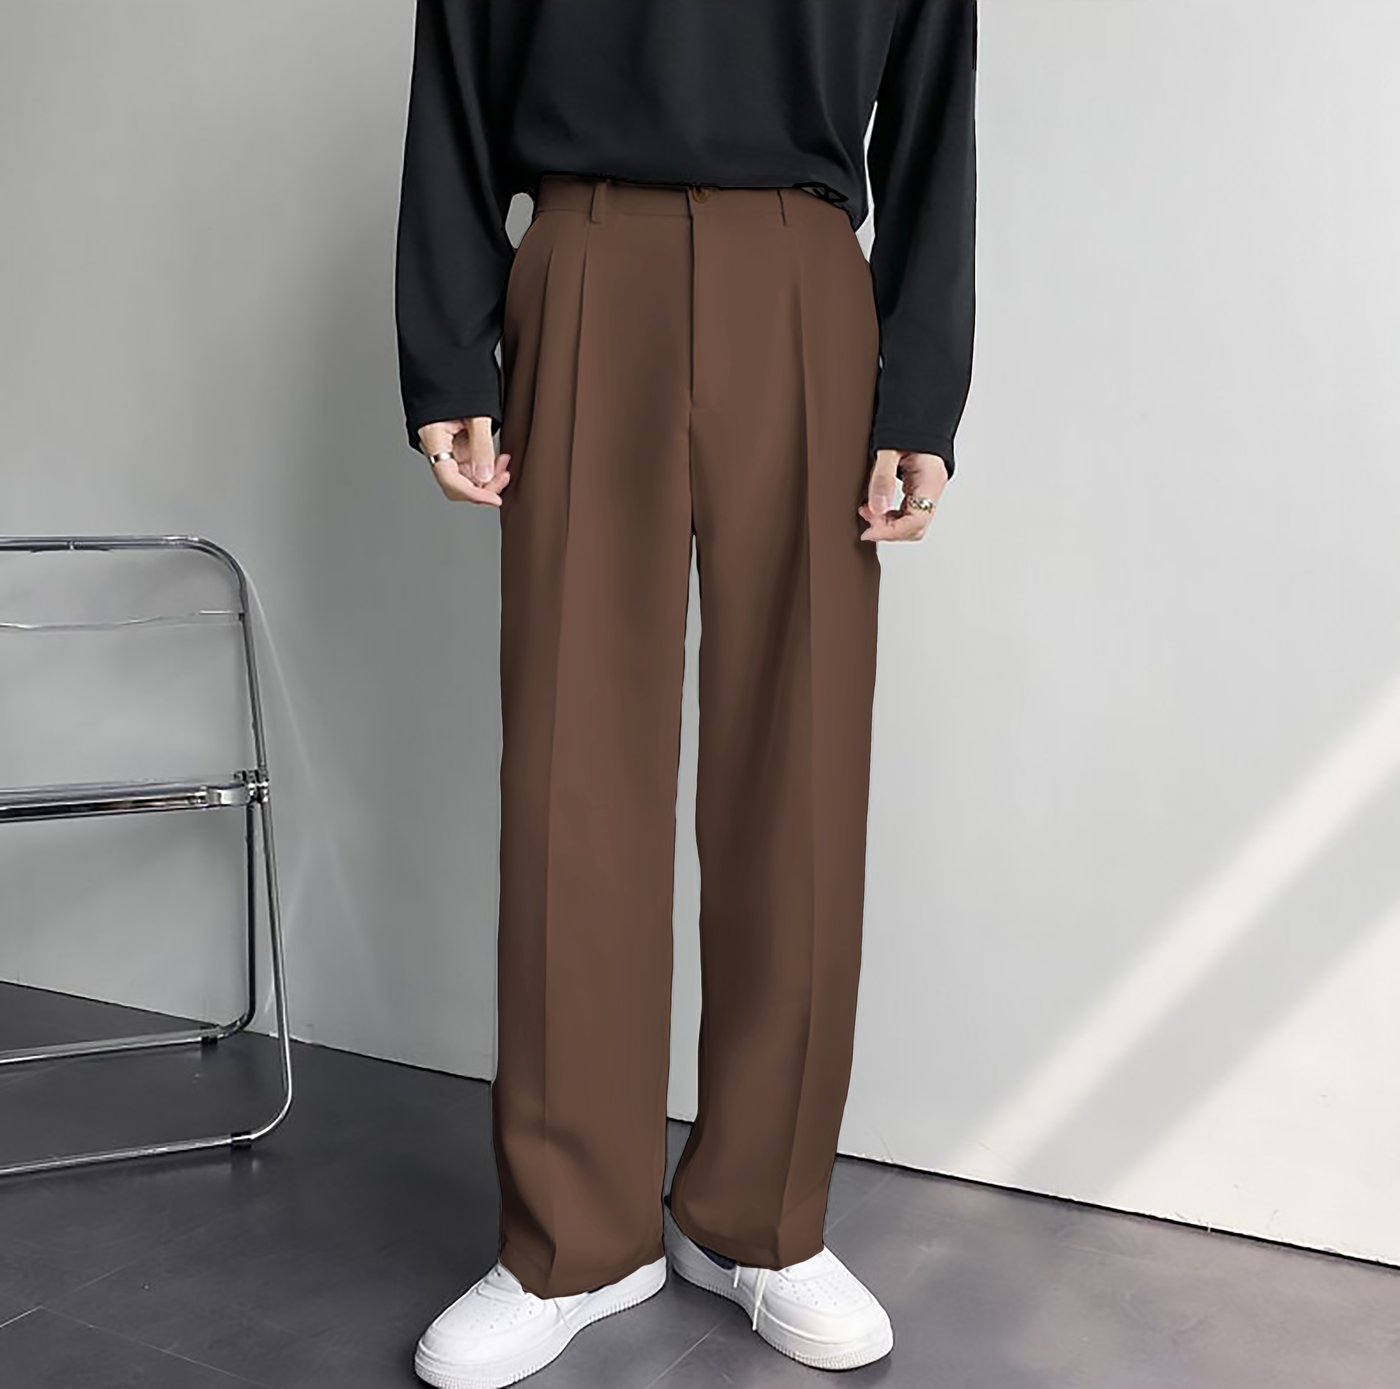 Buy PERDONTOO Mens Linen Cotton Loose Fit Casual Lightweight Elastic Waist  Summer Pants 2XLW38W40 Beige at Amazonin